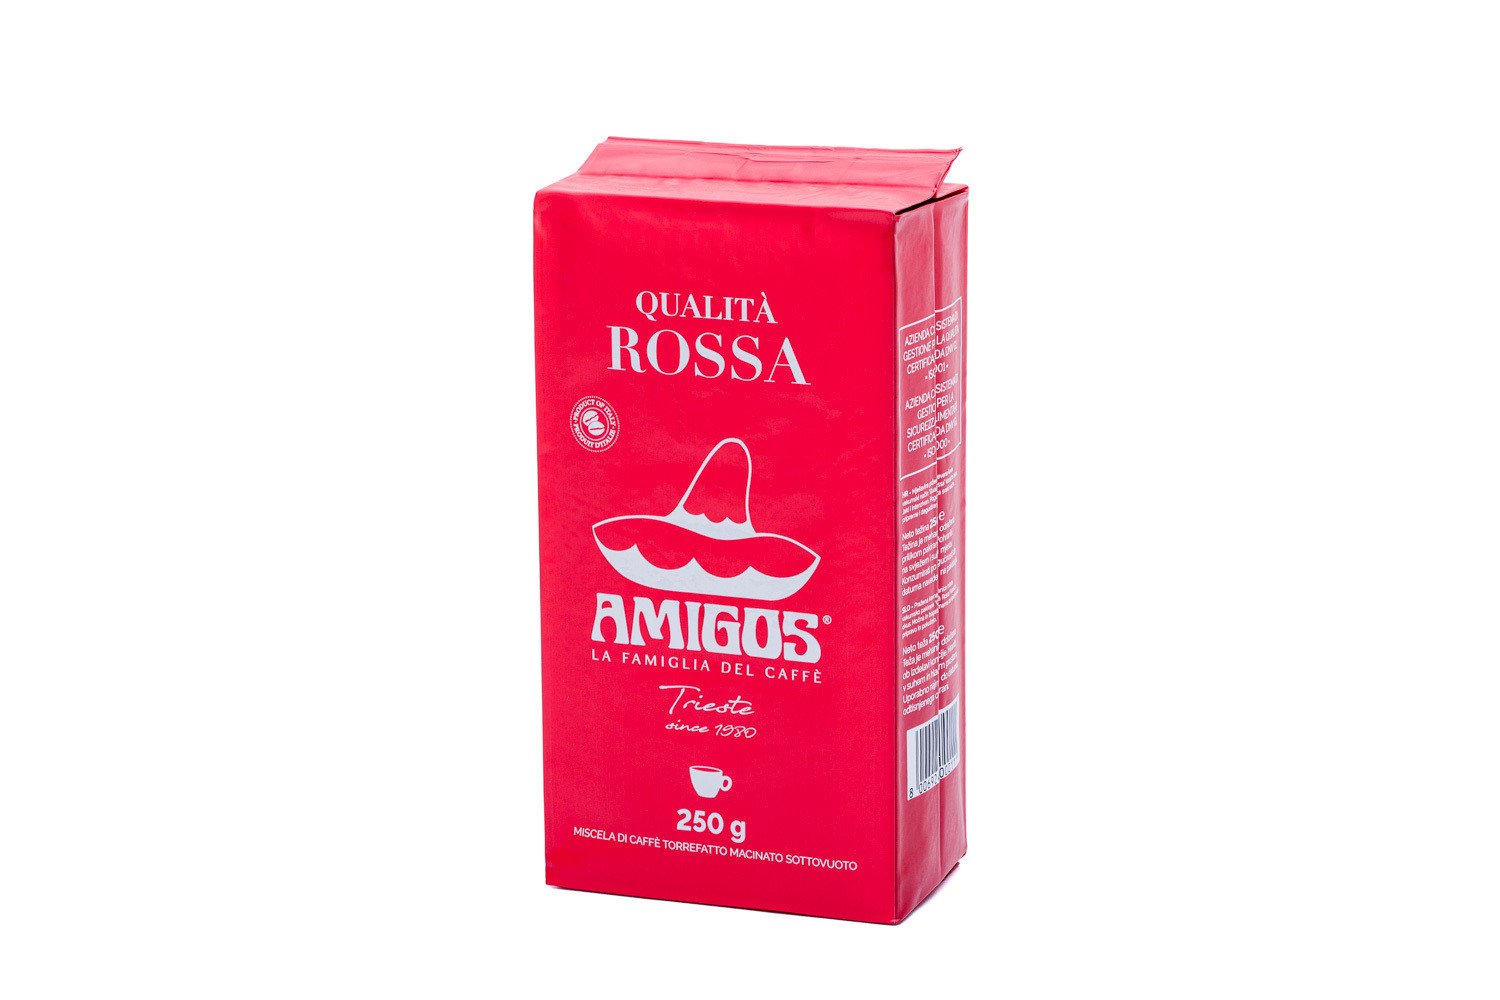 Qualità Rossa ground coffee – AmigosCaffè